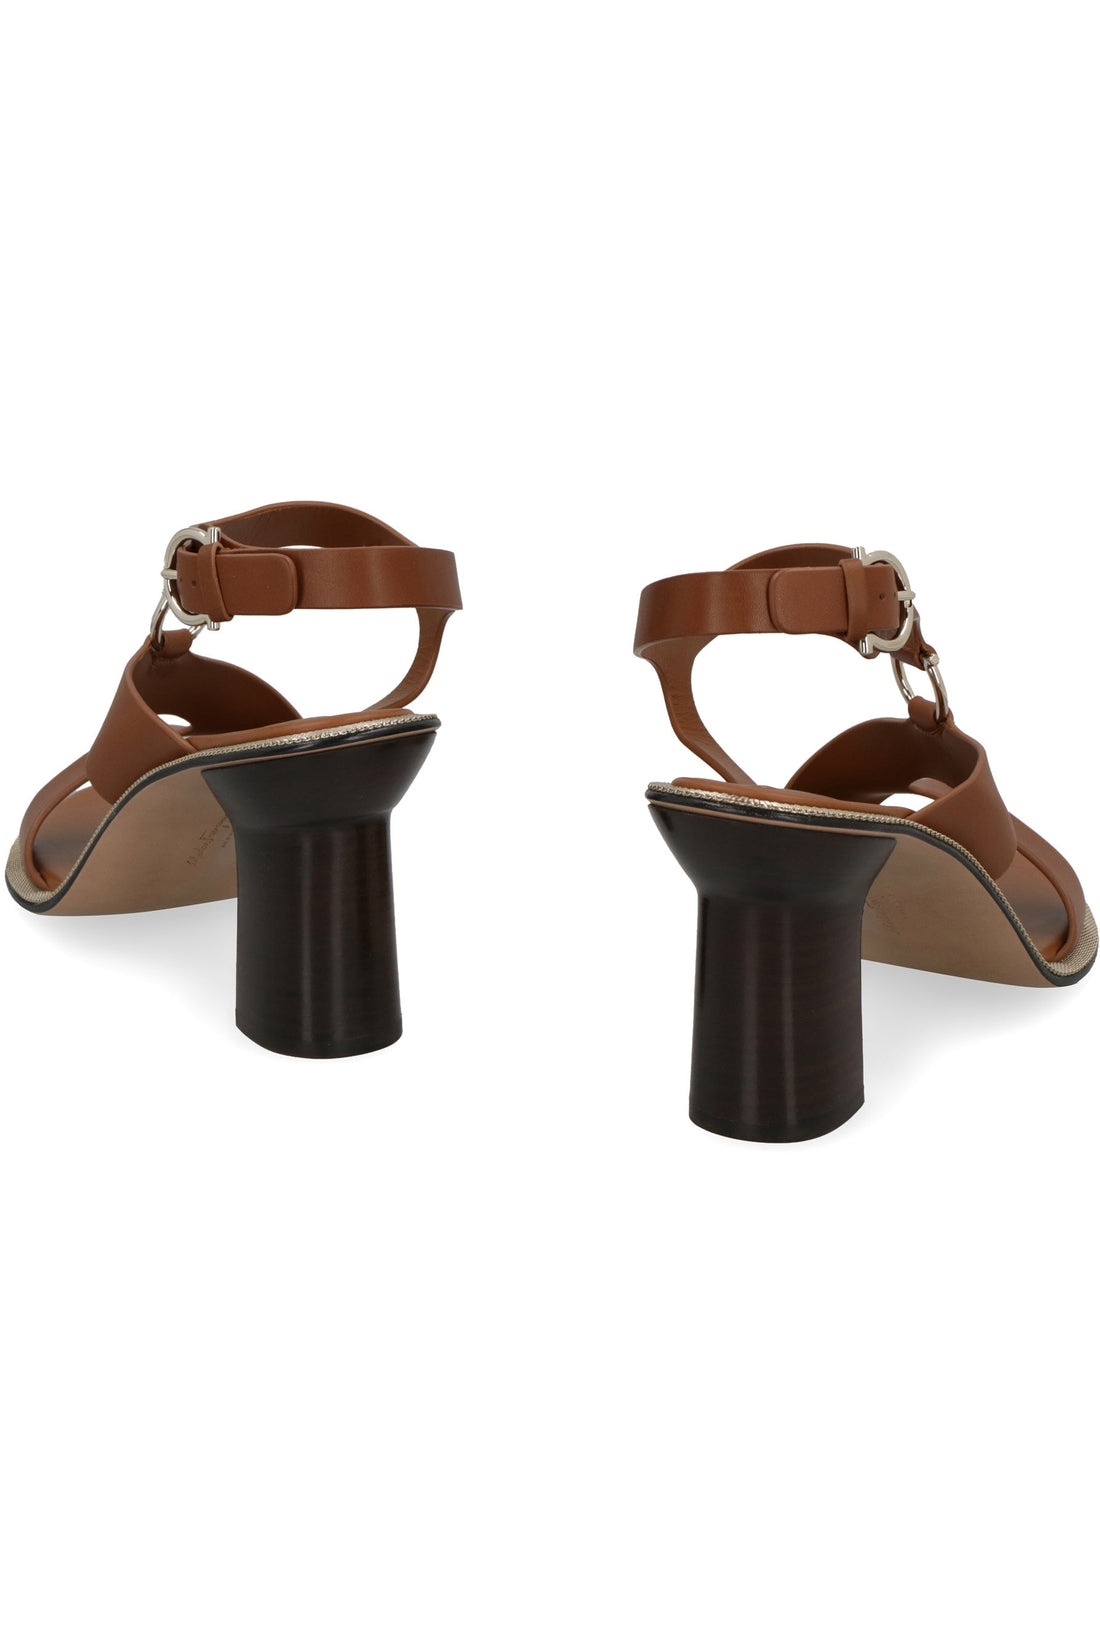 FERRAGAMO-OUTLET-SALE-Heeled leather sandals-ARCHIVIST